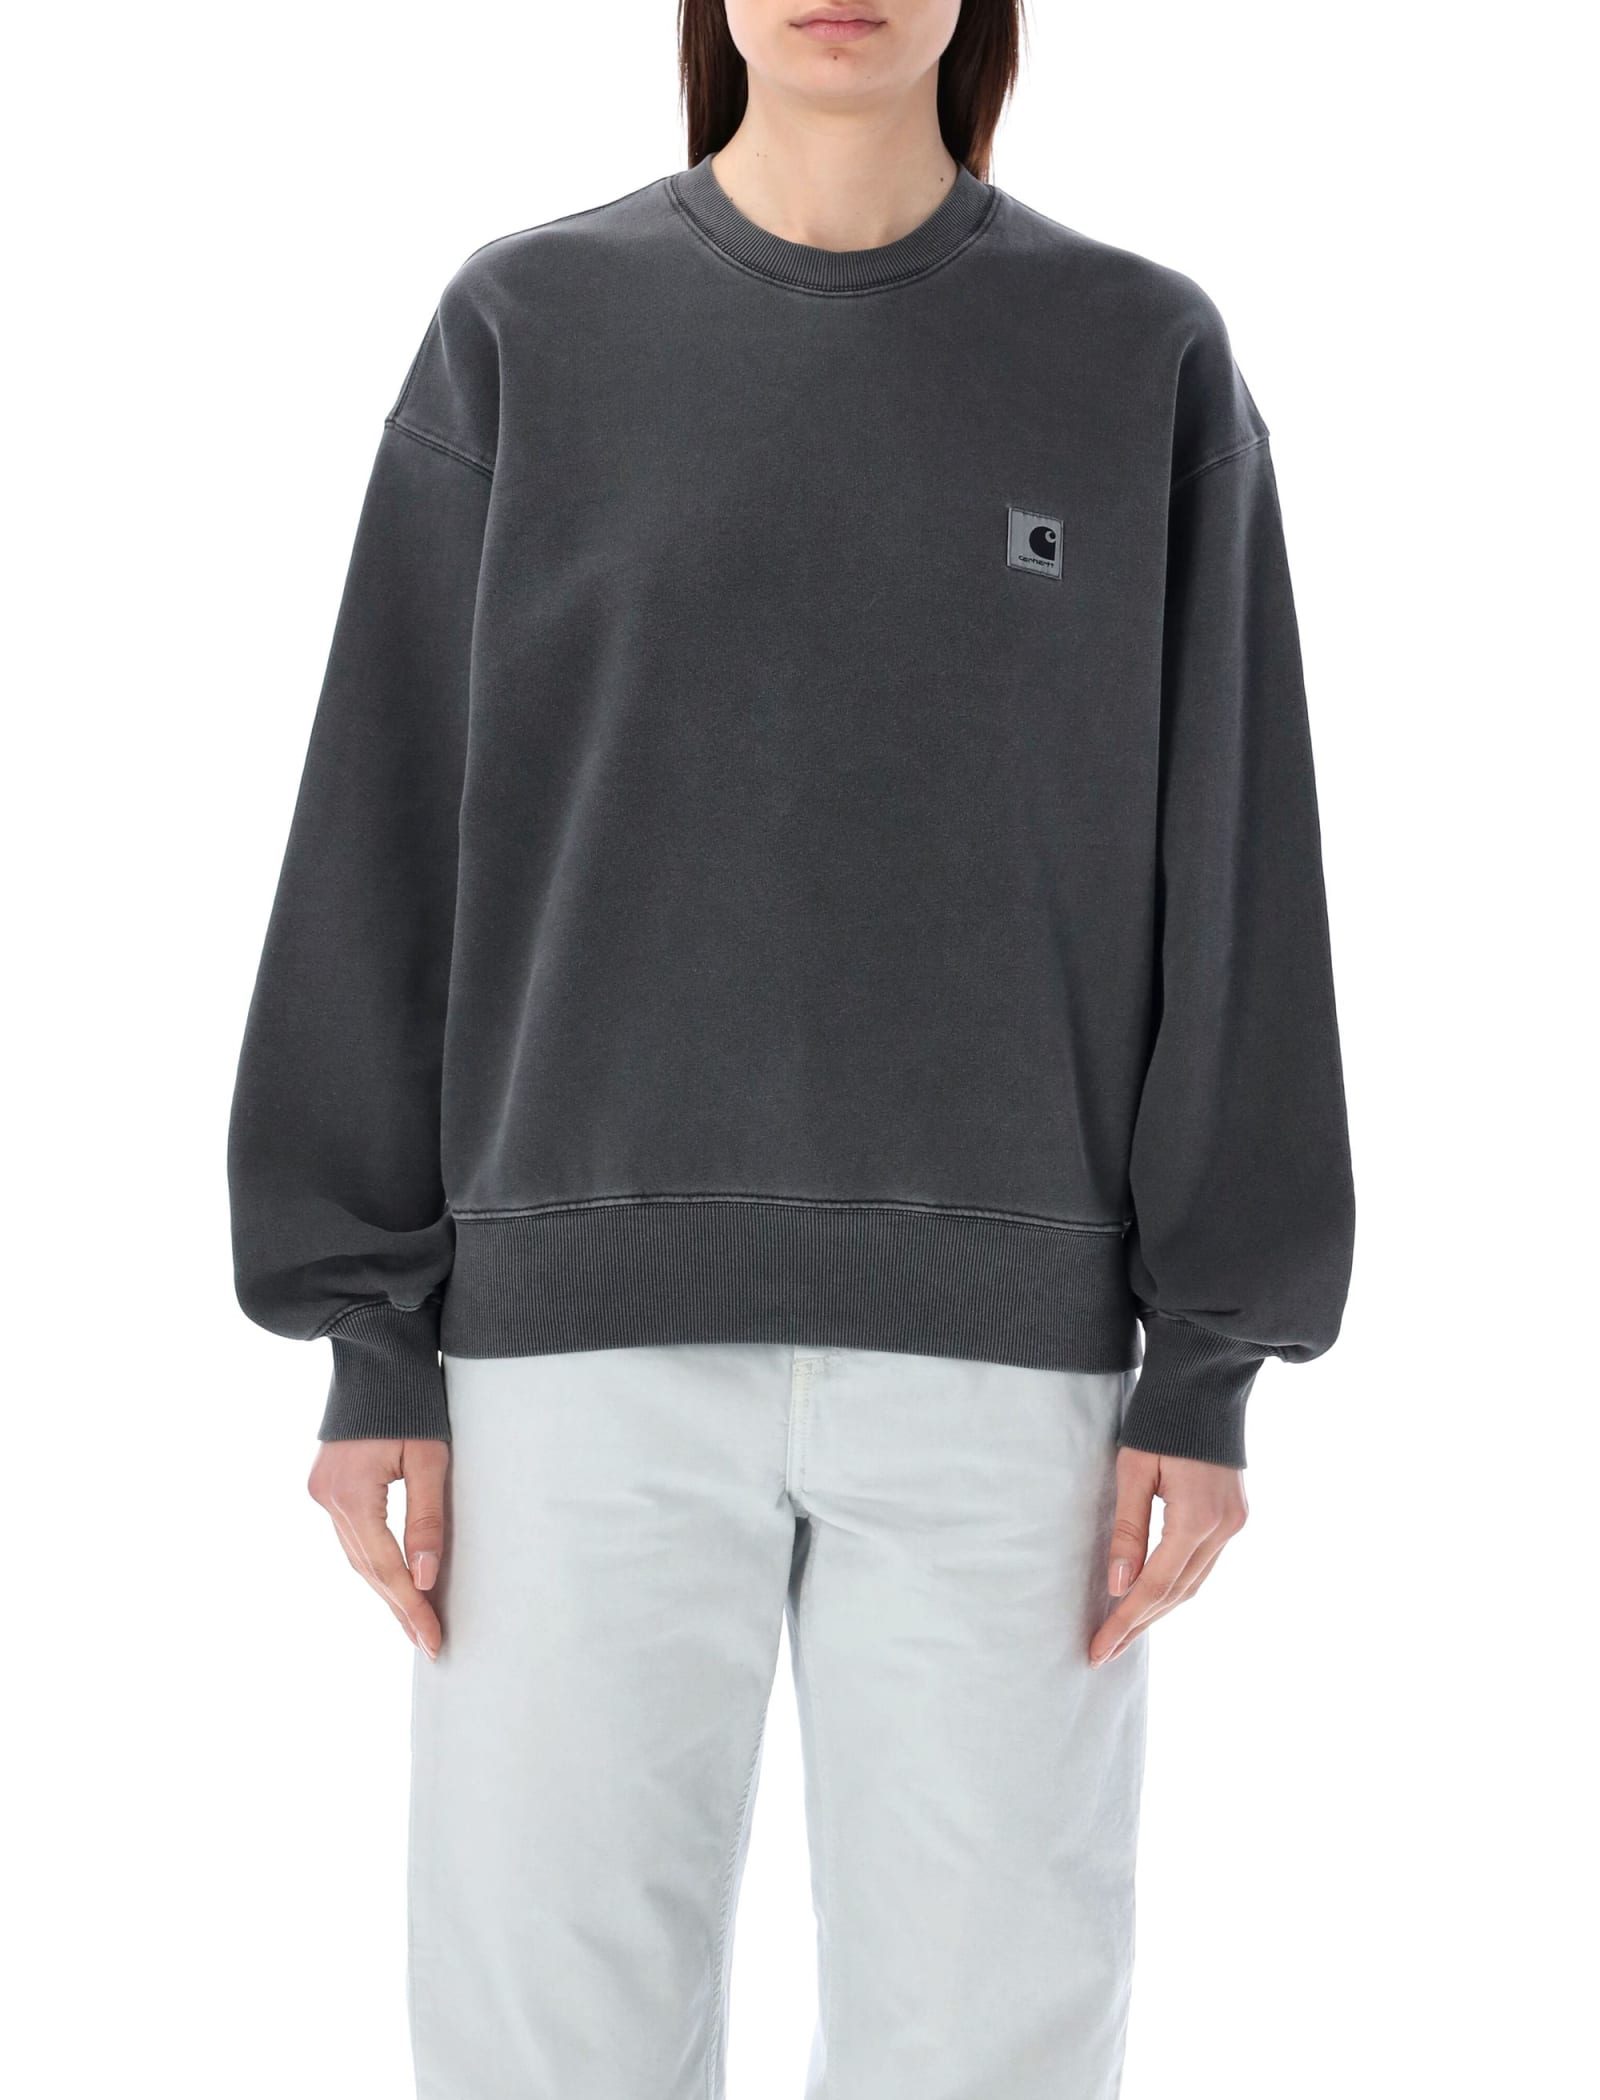 Carhartt Nelson Sweatshirt - 0CHARCOAL BLACK - female - Size: Medium